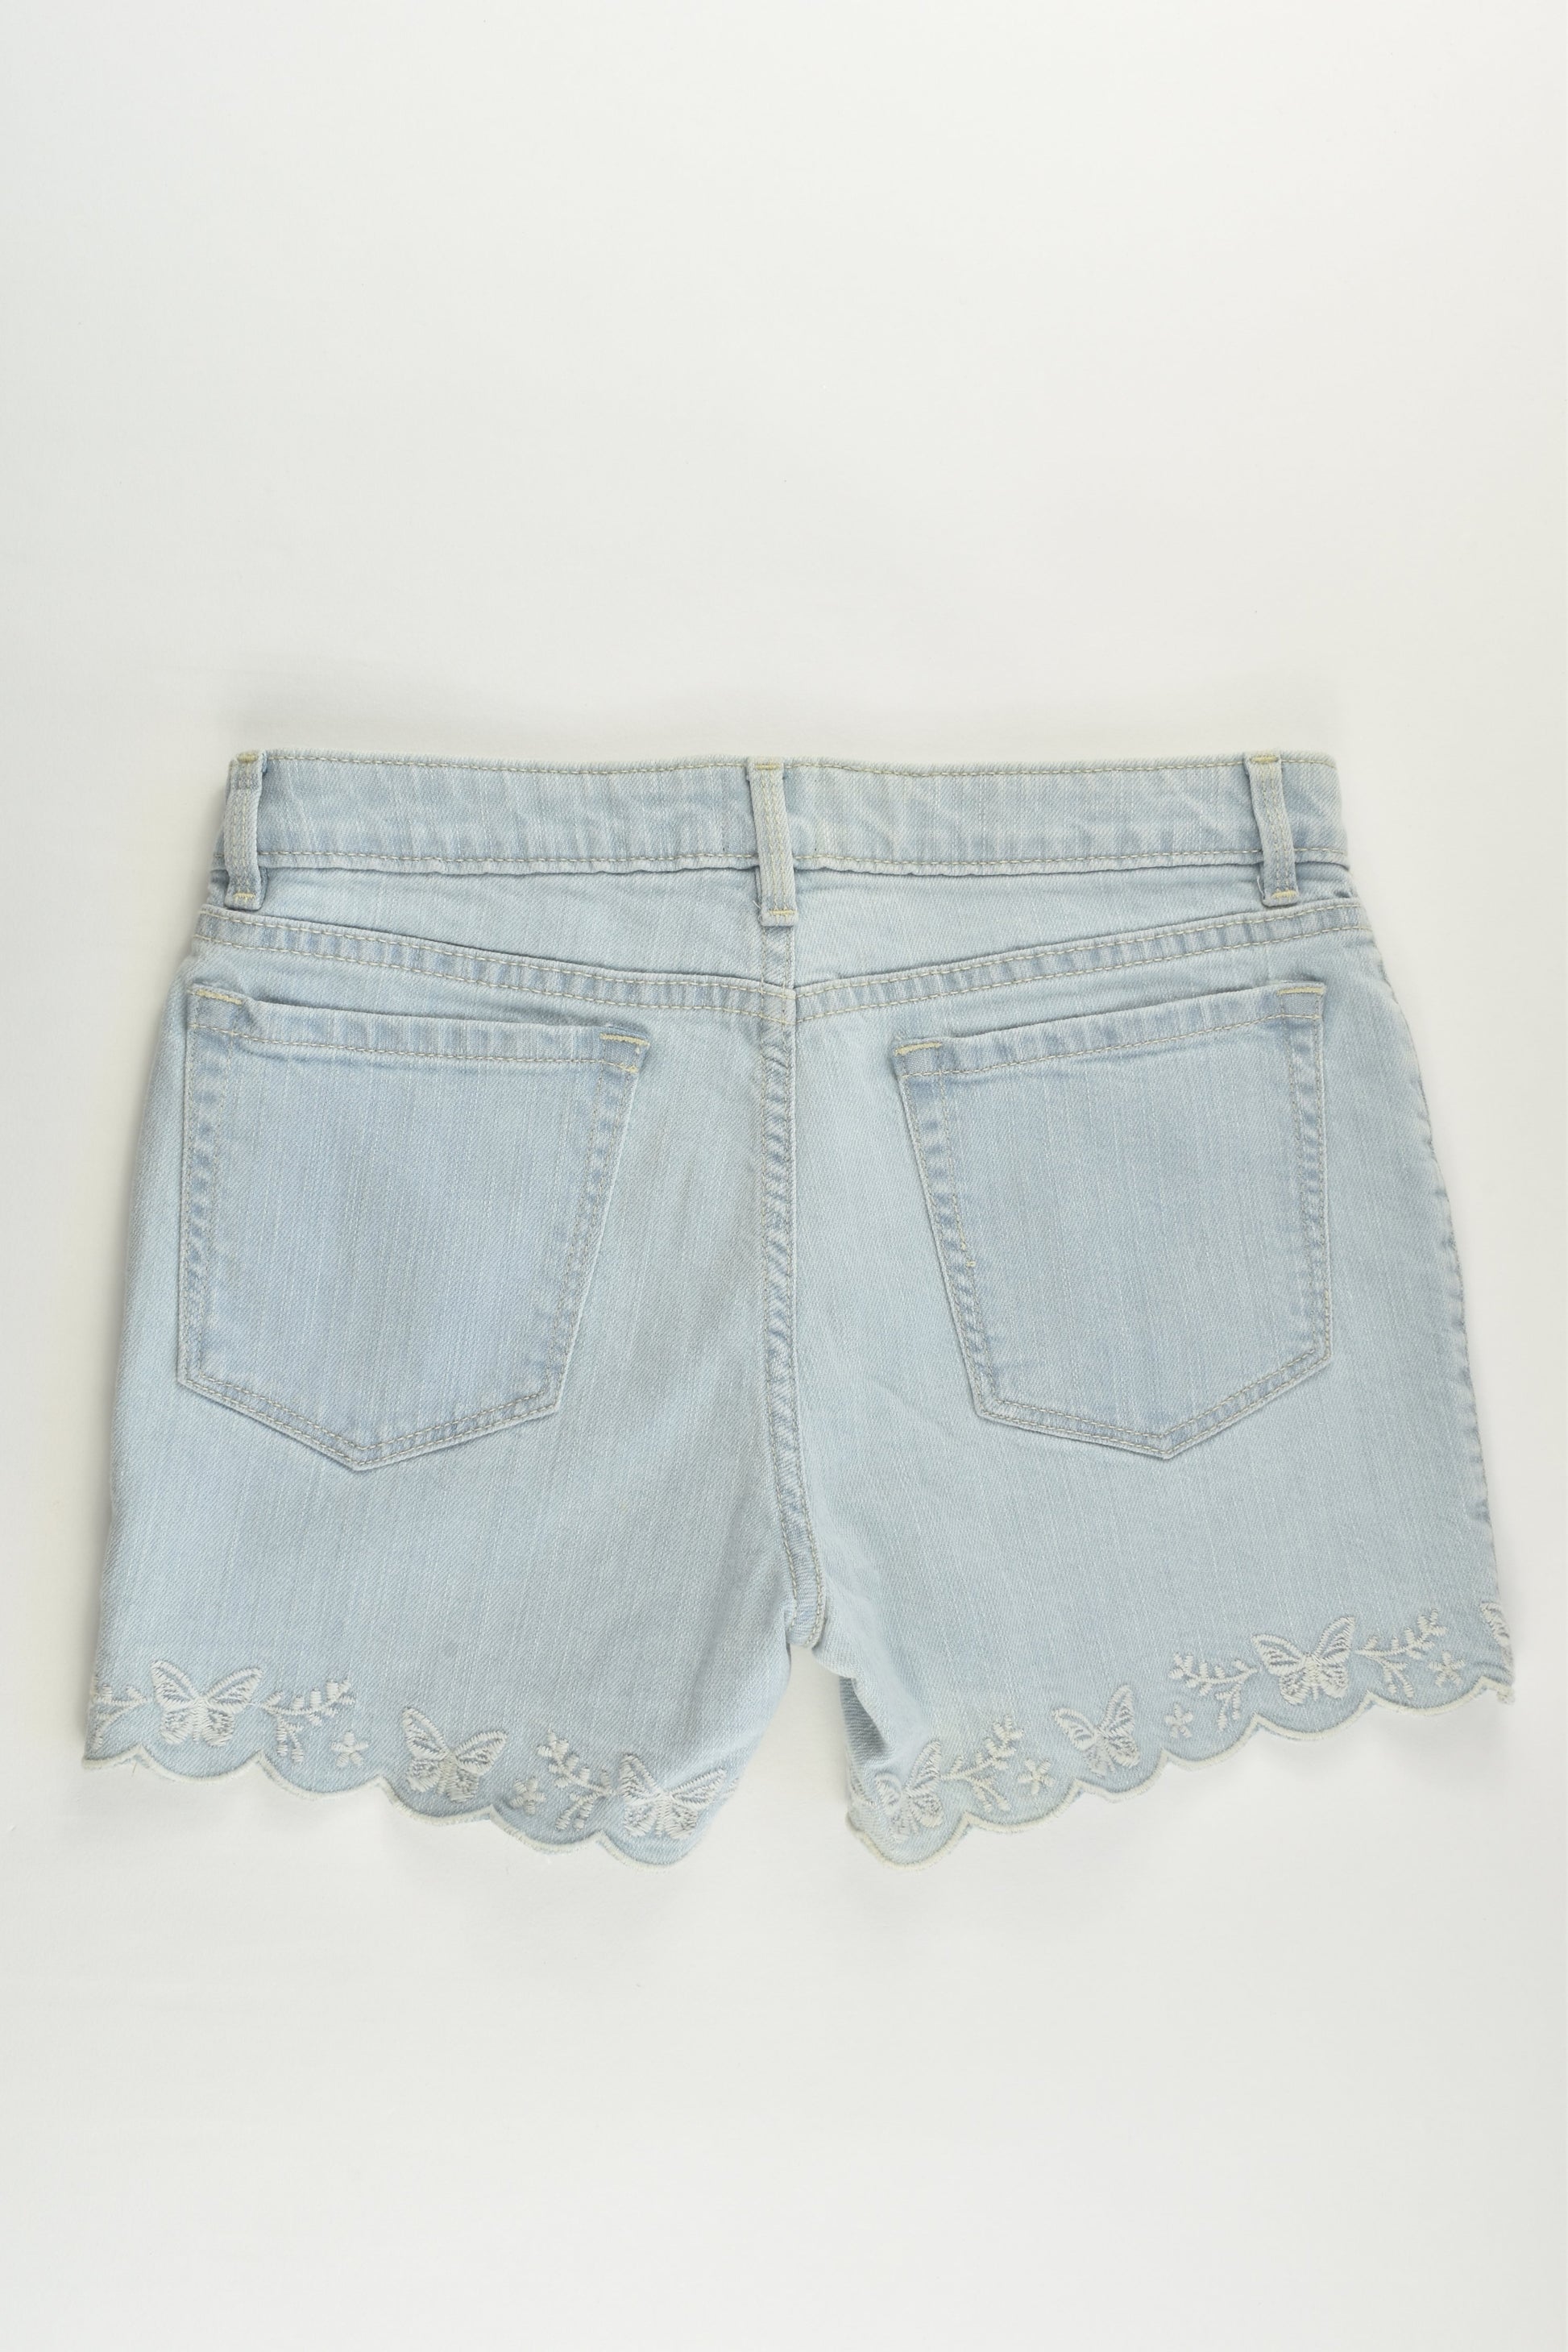 Gap Kids Size 12 Regular Fit Stretchy Denim Shorts with Lace Details